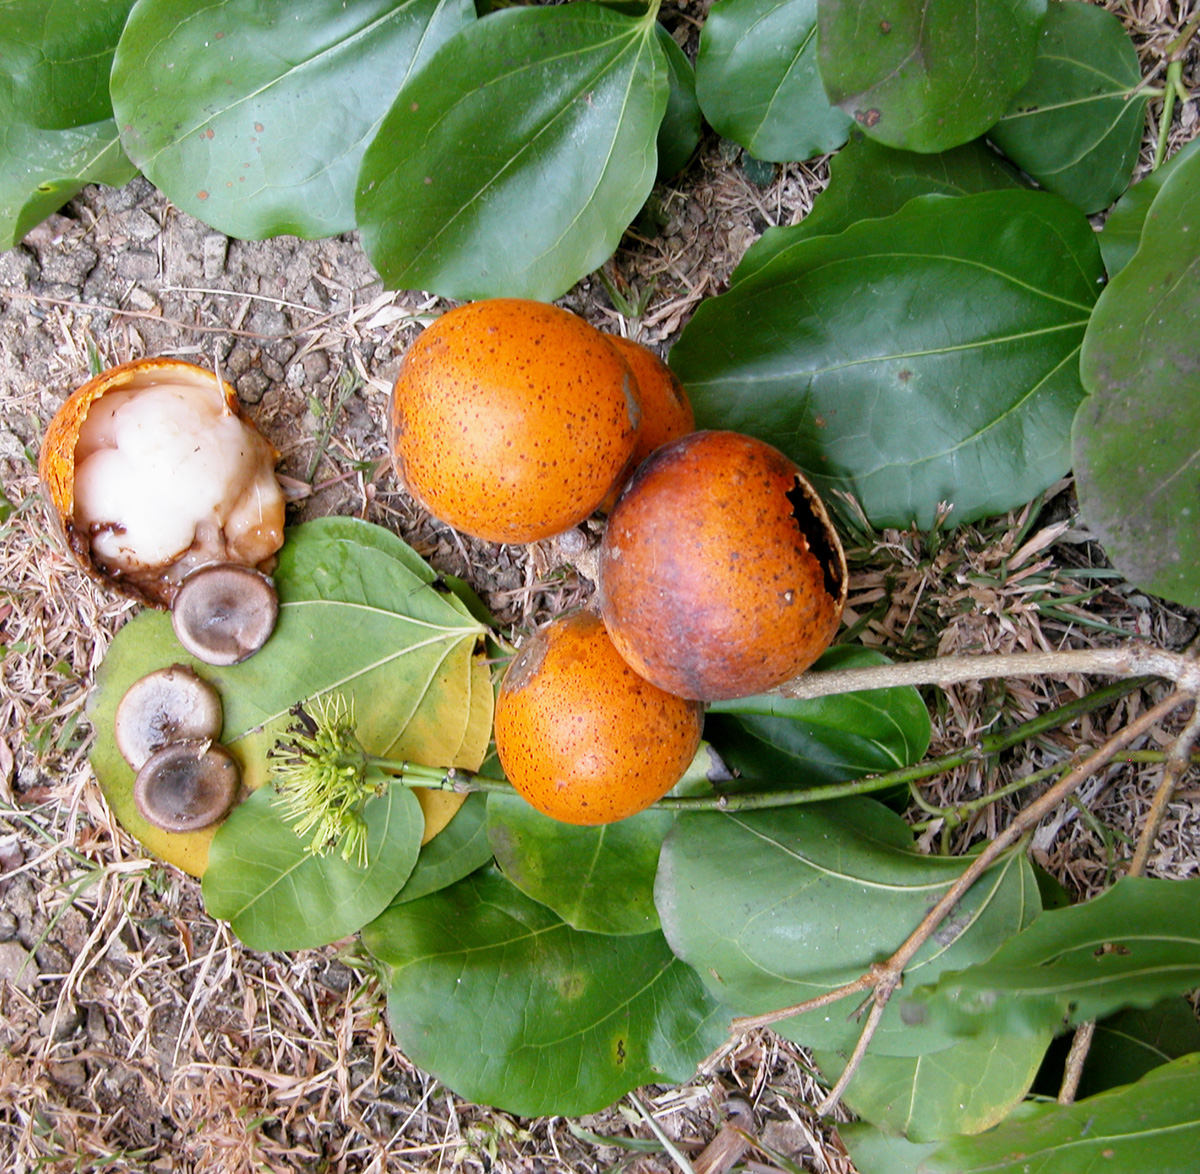 kupilu: Strychnos nuxvomica Linn: - Fruit open with seed